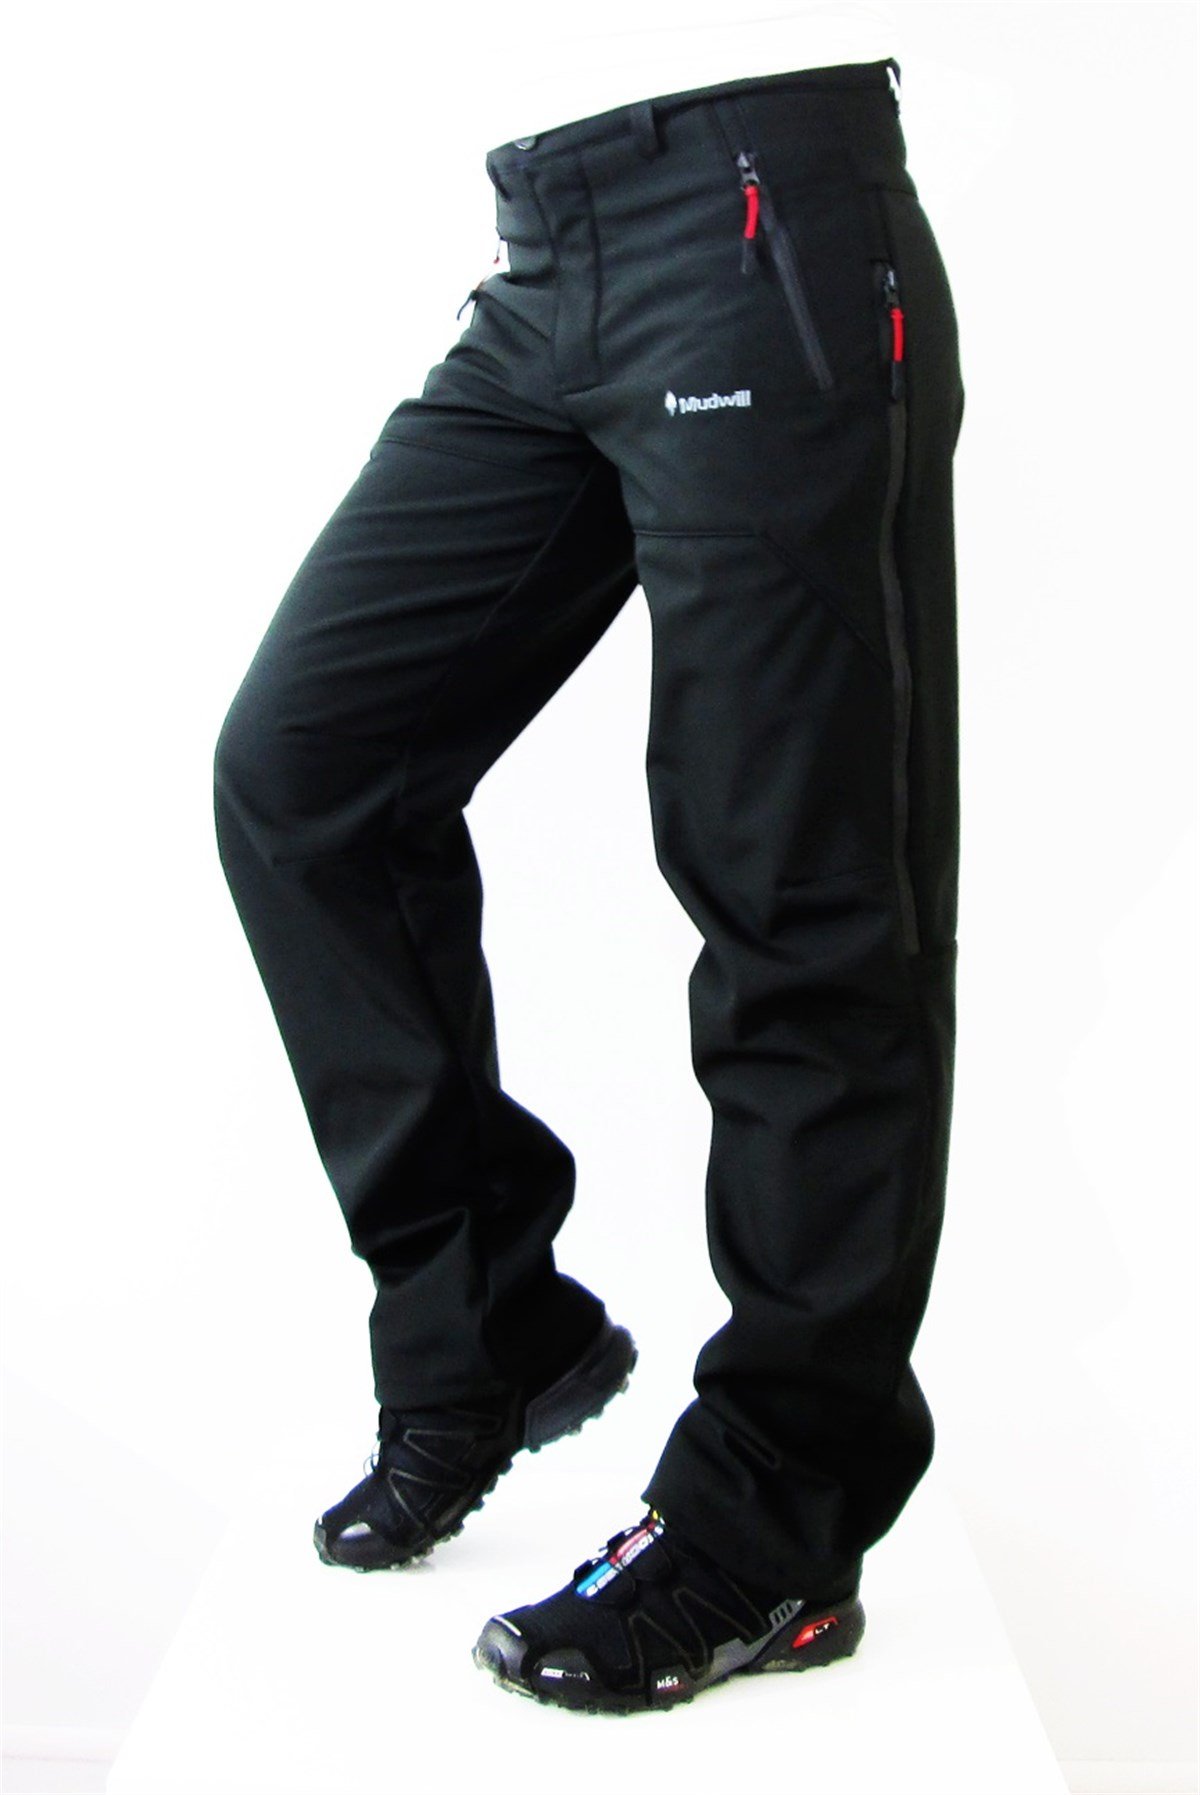 Mudwill Outdoor Softshell Erkek Pantolon - Siyah